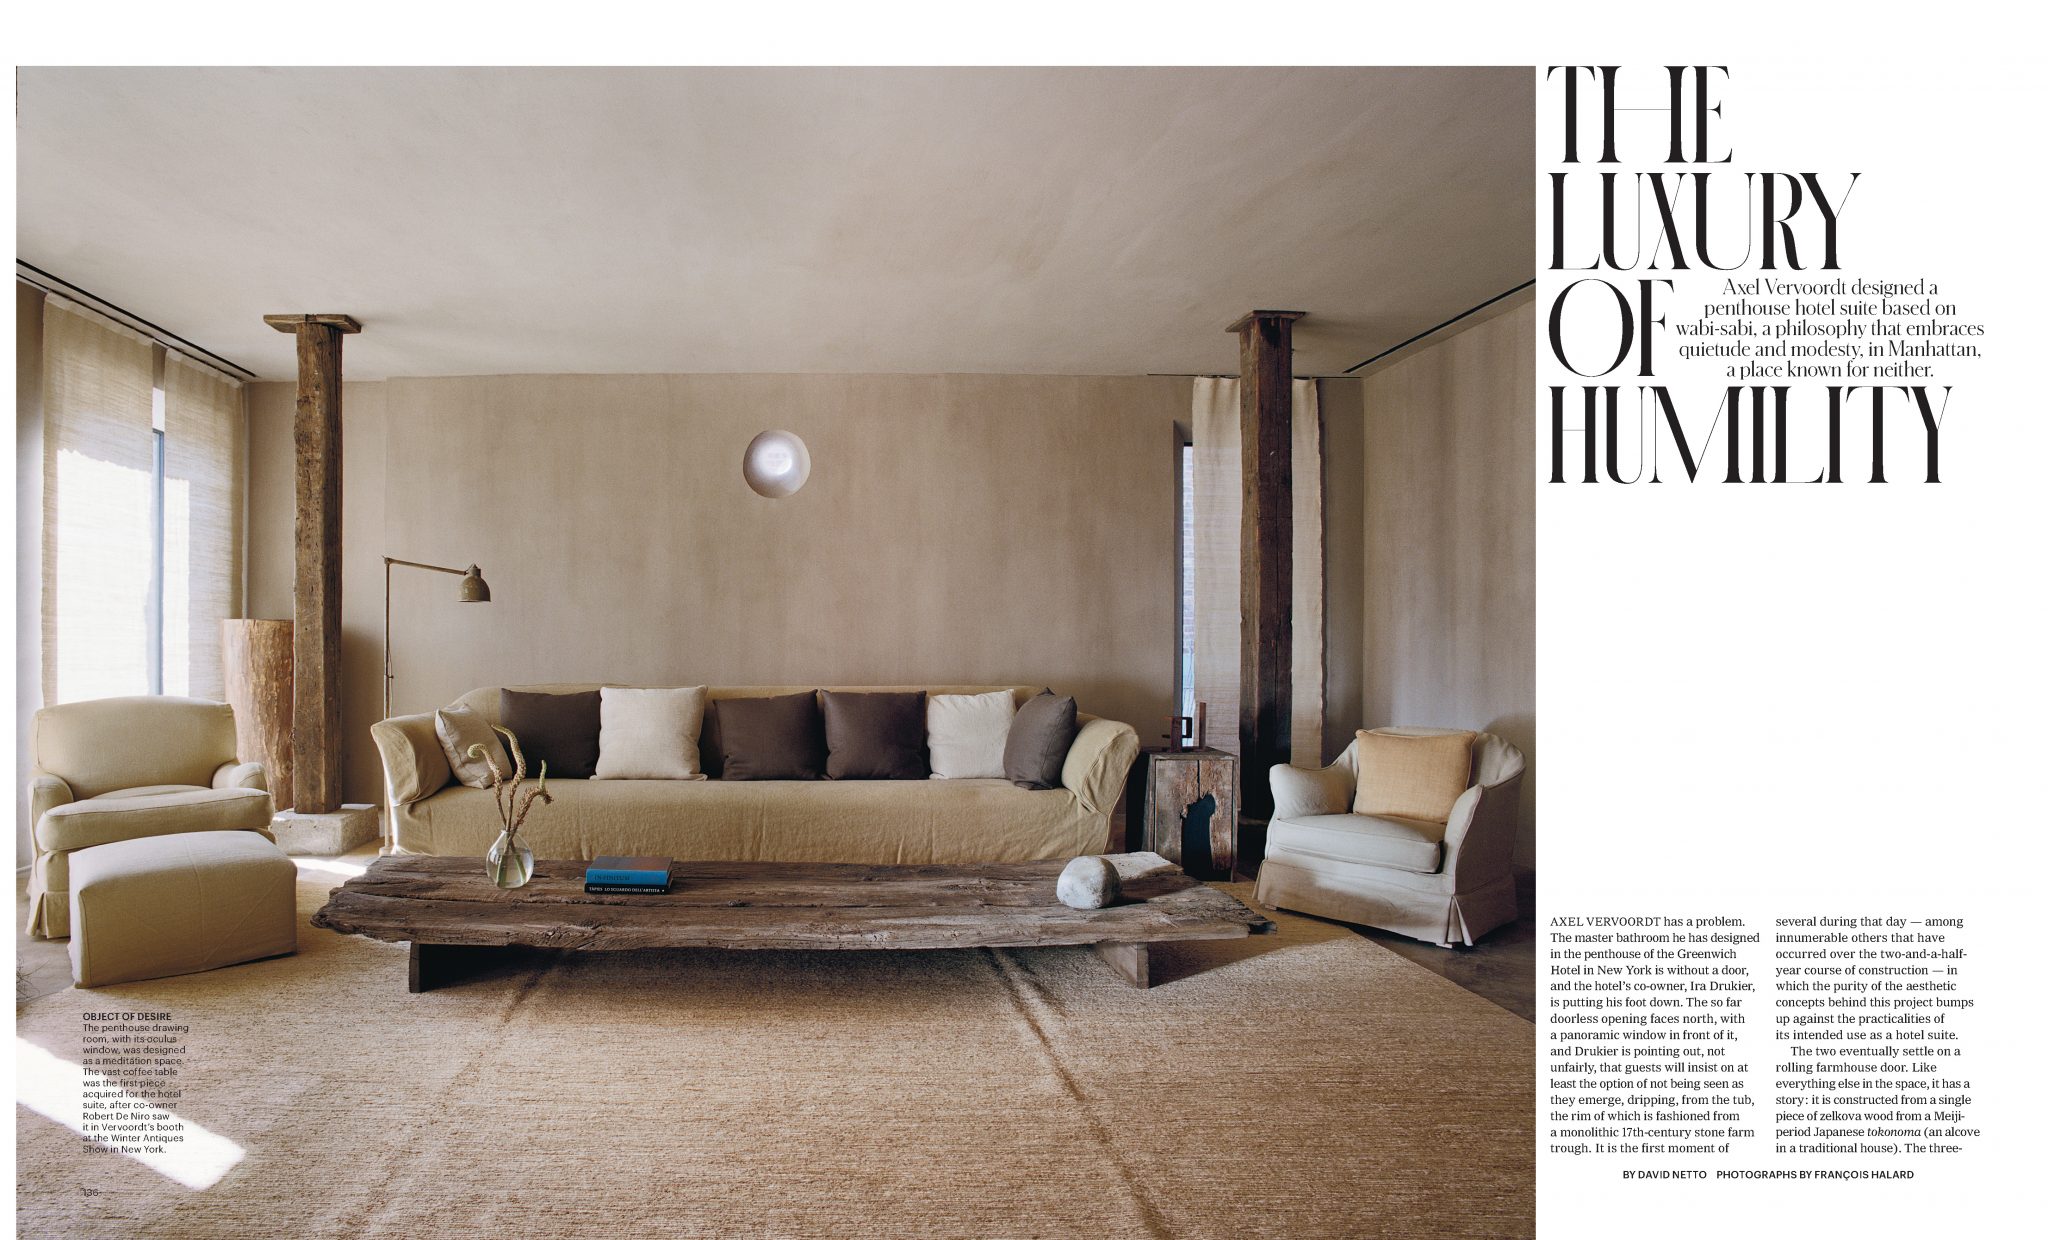 François Halard | T Magazine: the luxury of humility | 1